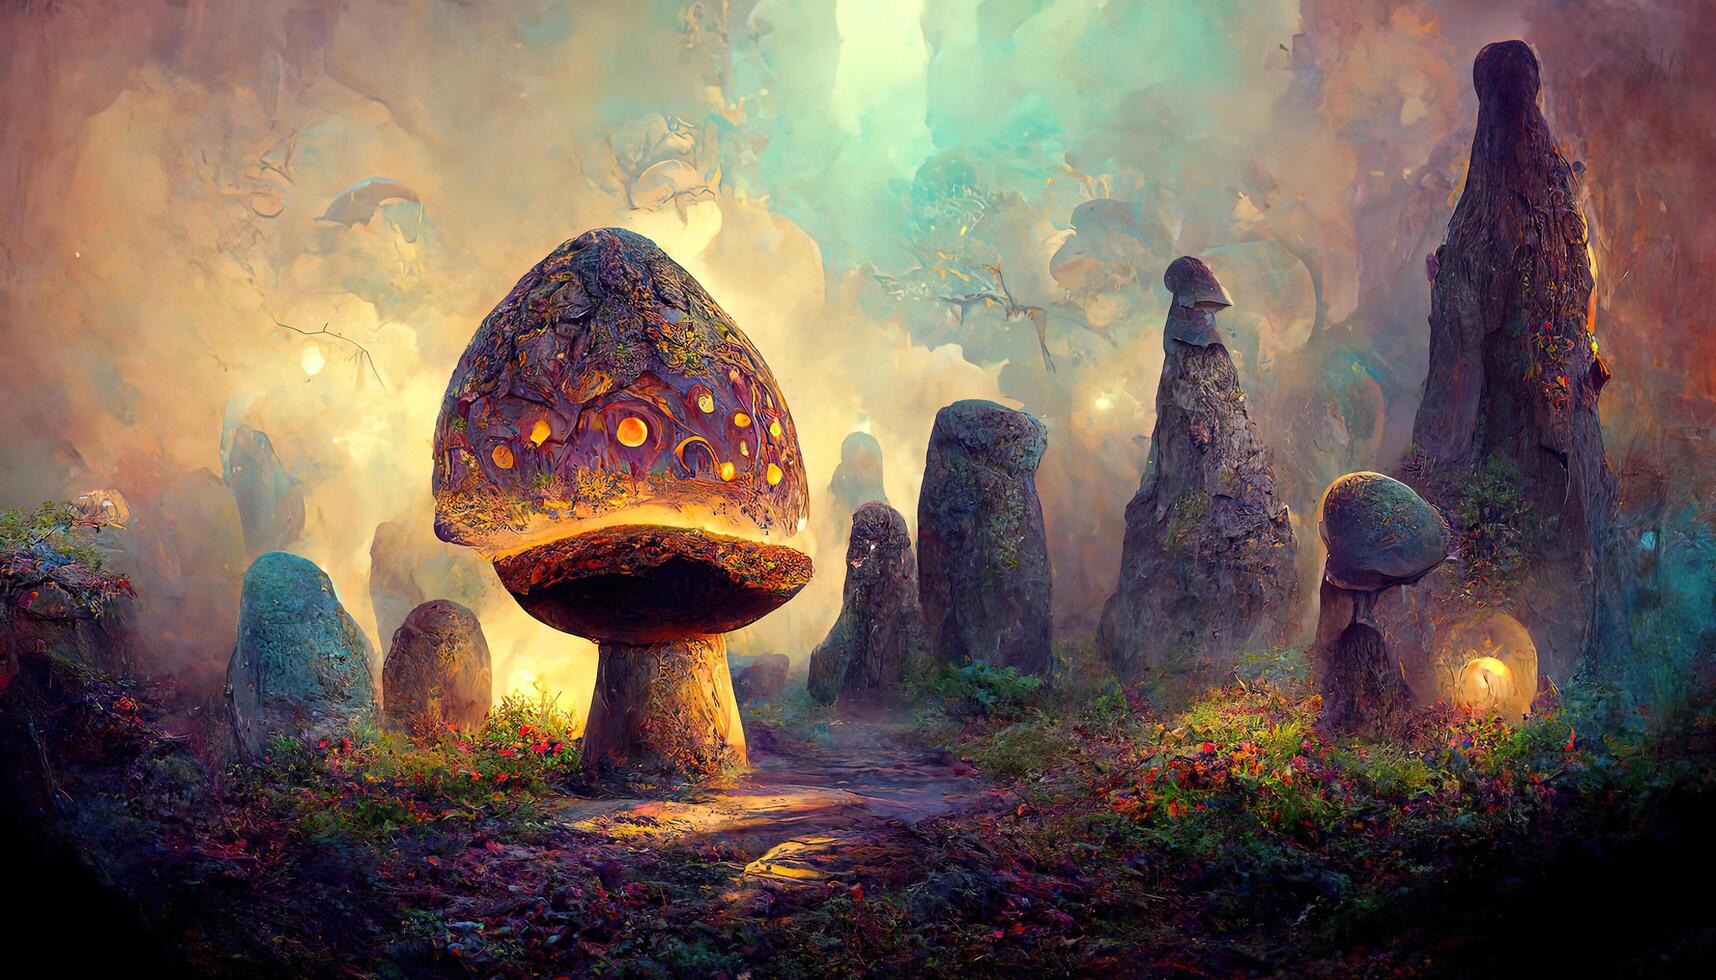 Floating islands with magic mushroom at night. photo